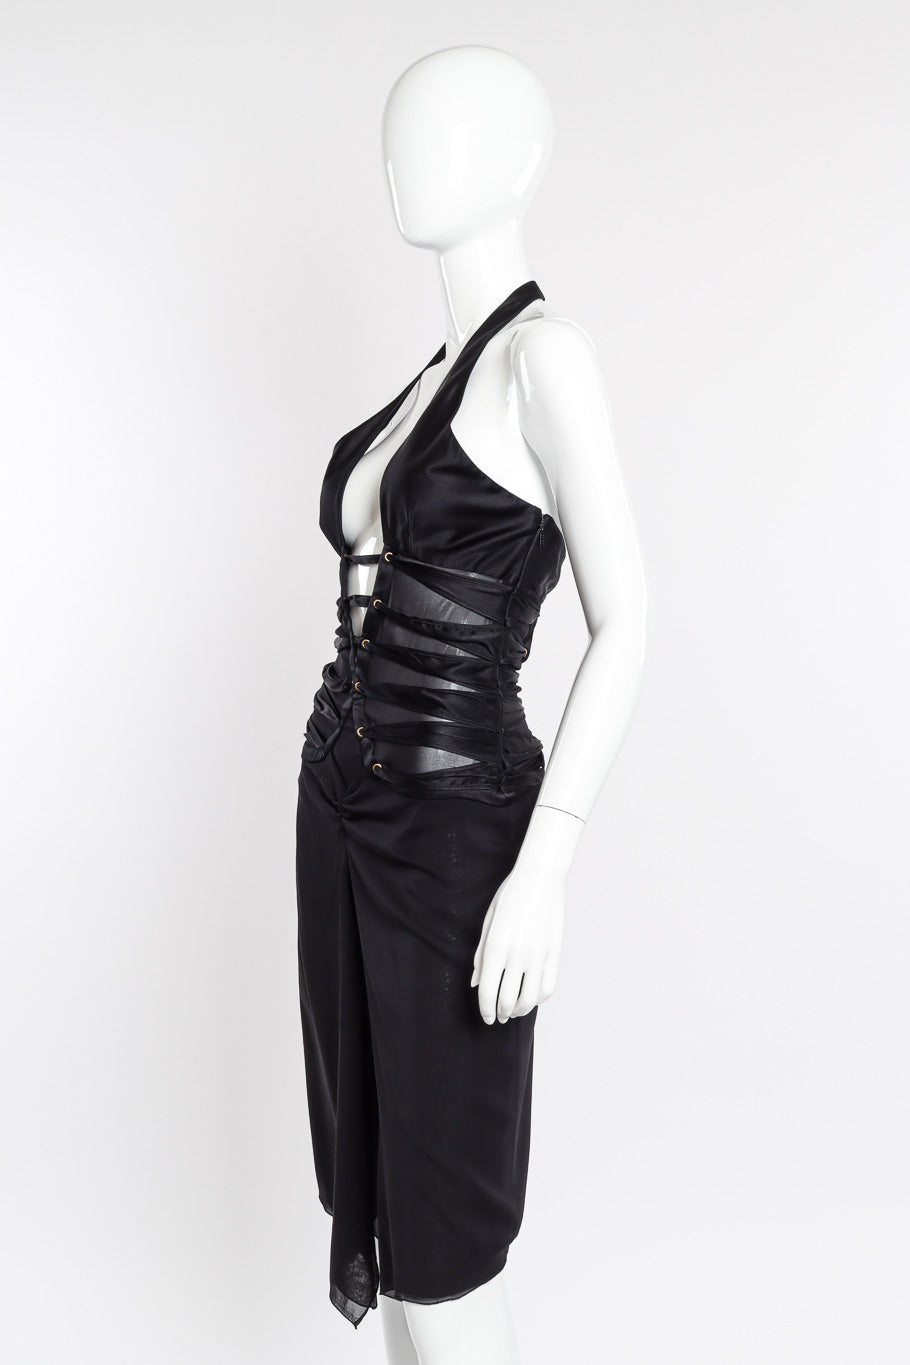 Halter dress by Tom Ford for Gucci on mannequin side @recessla